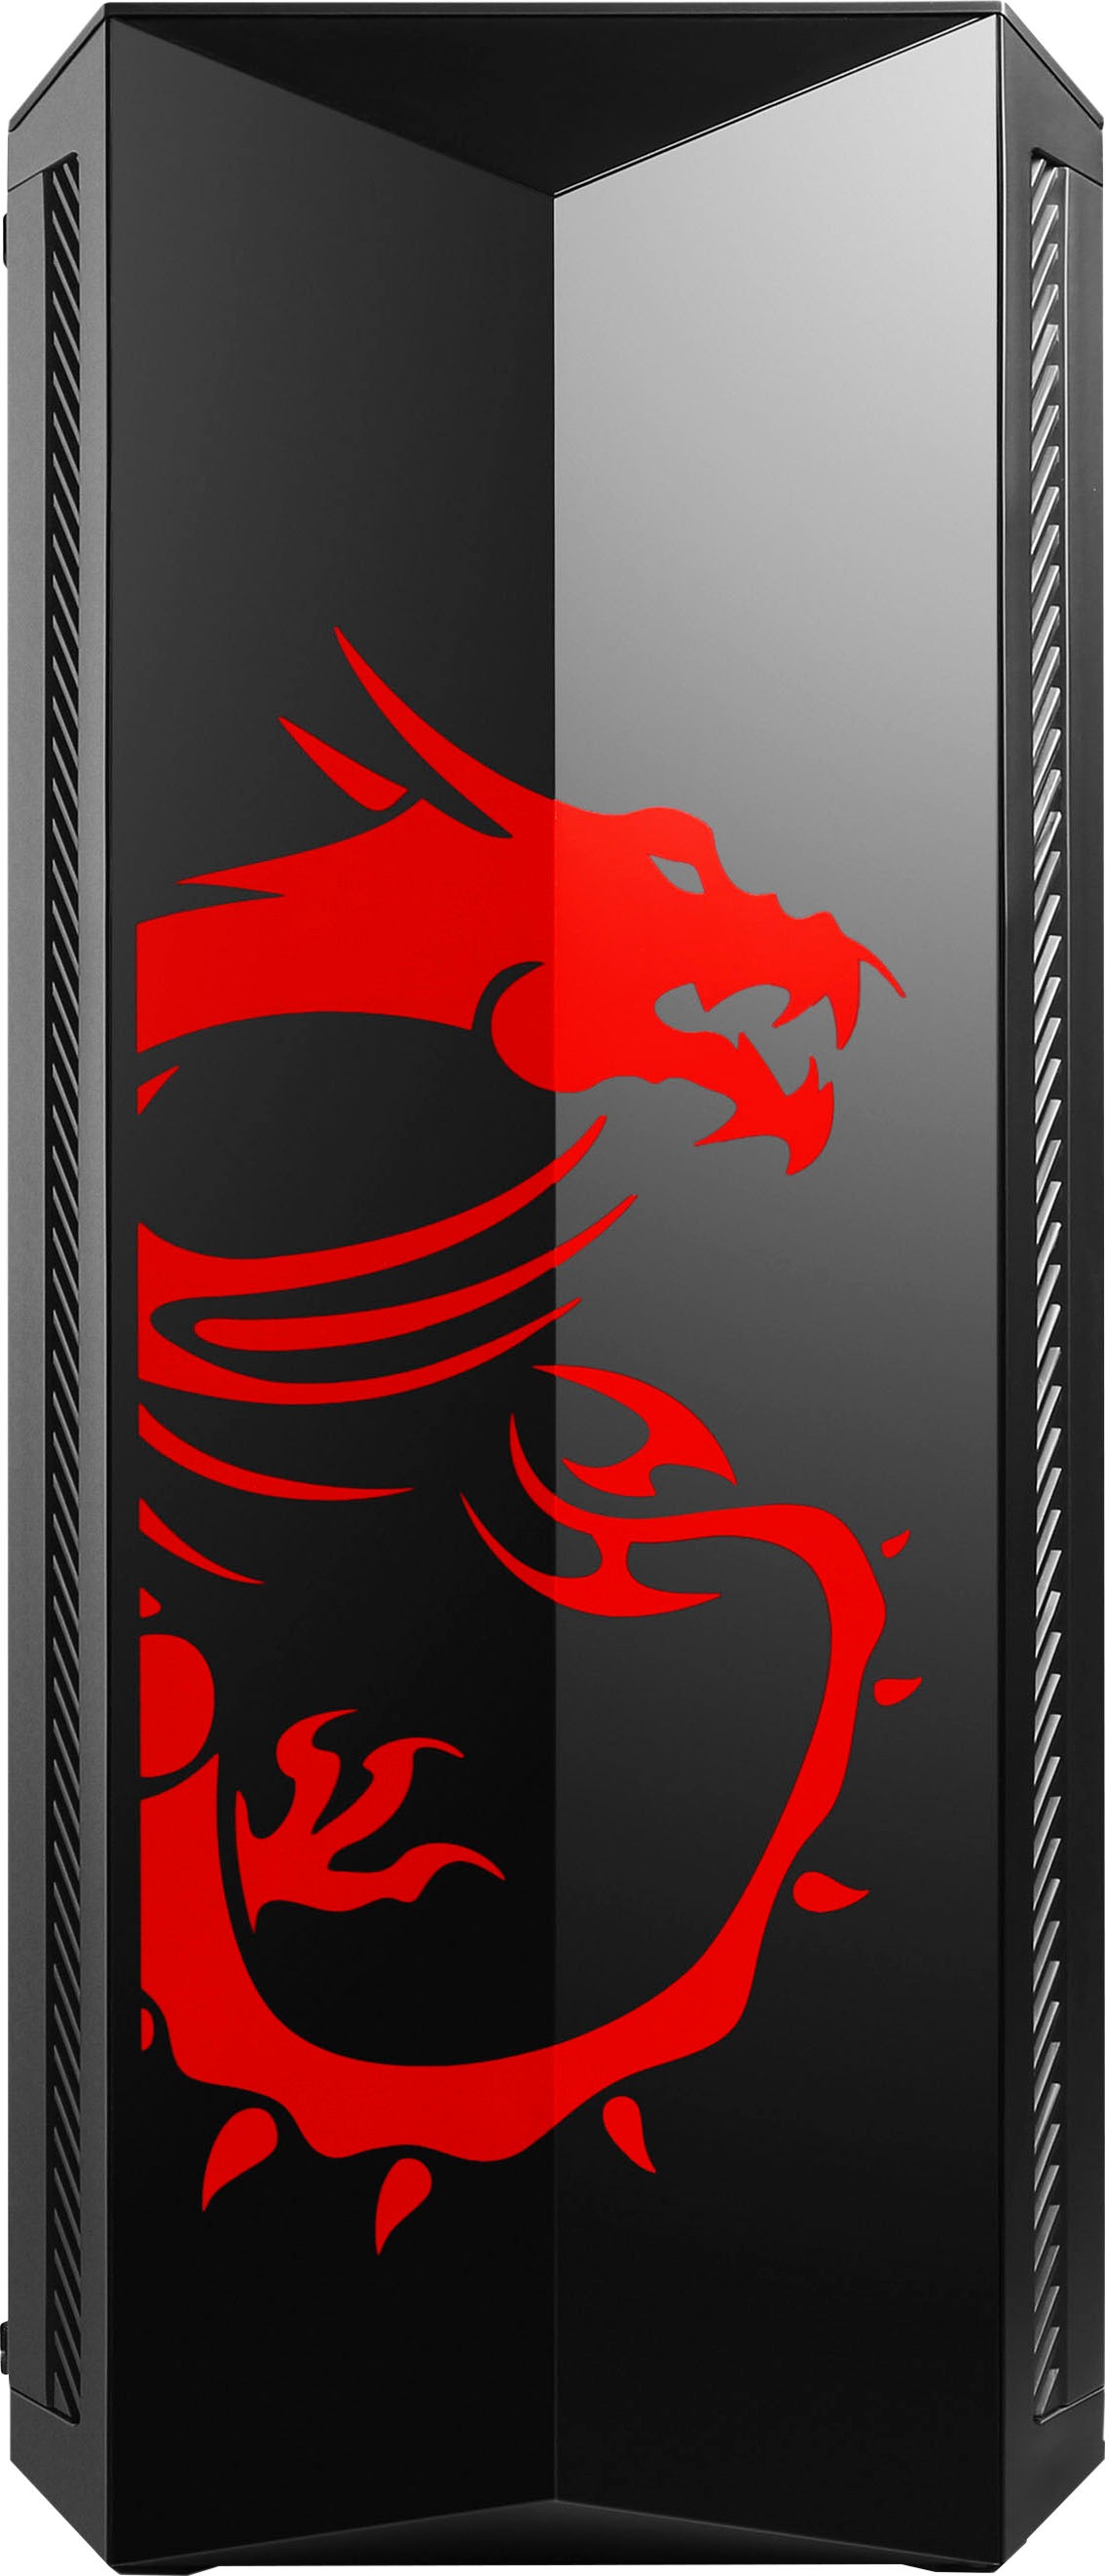 CSL Gaming-PC »HydroX V25119 MSI Dragon Advanced Edition«